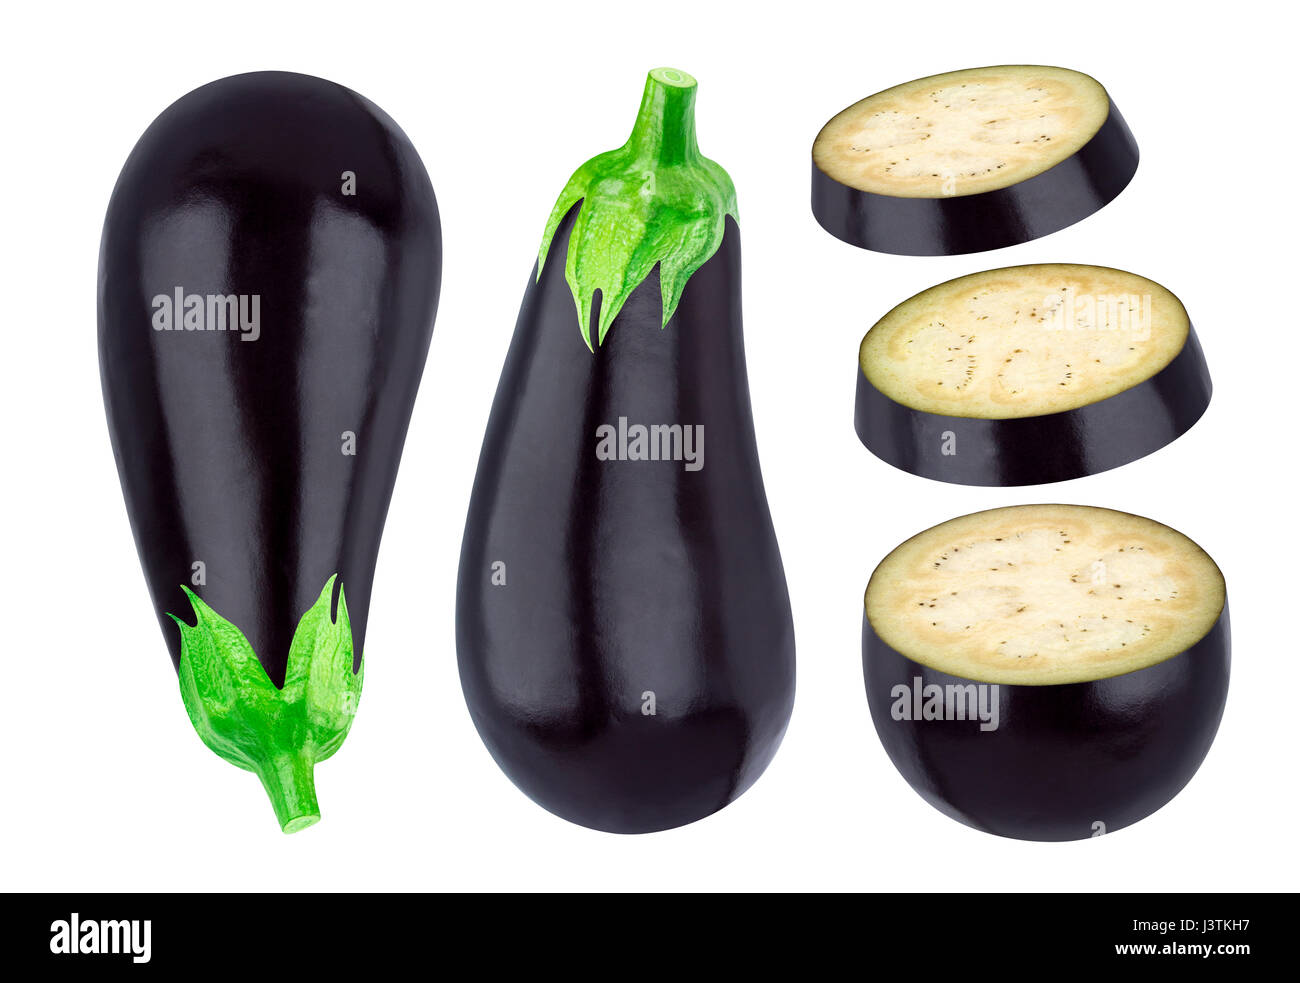 Whole and sliced eggplant isolated on white Stock Photo